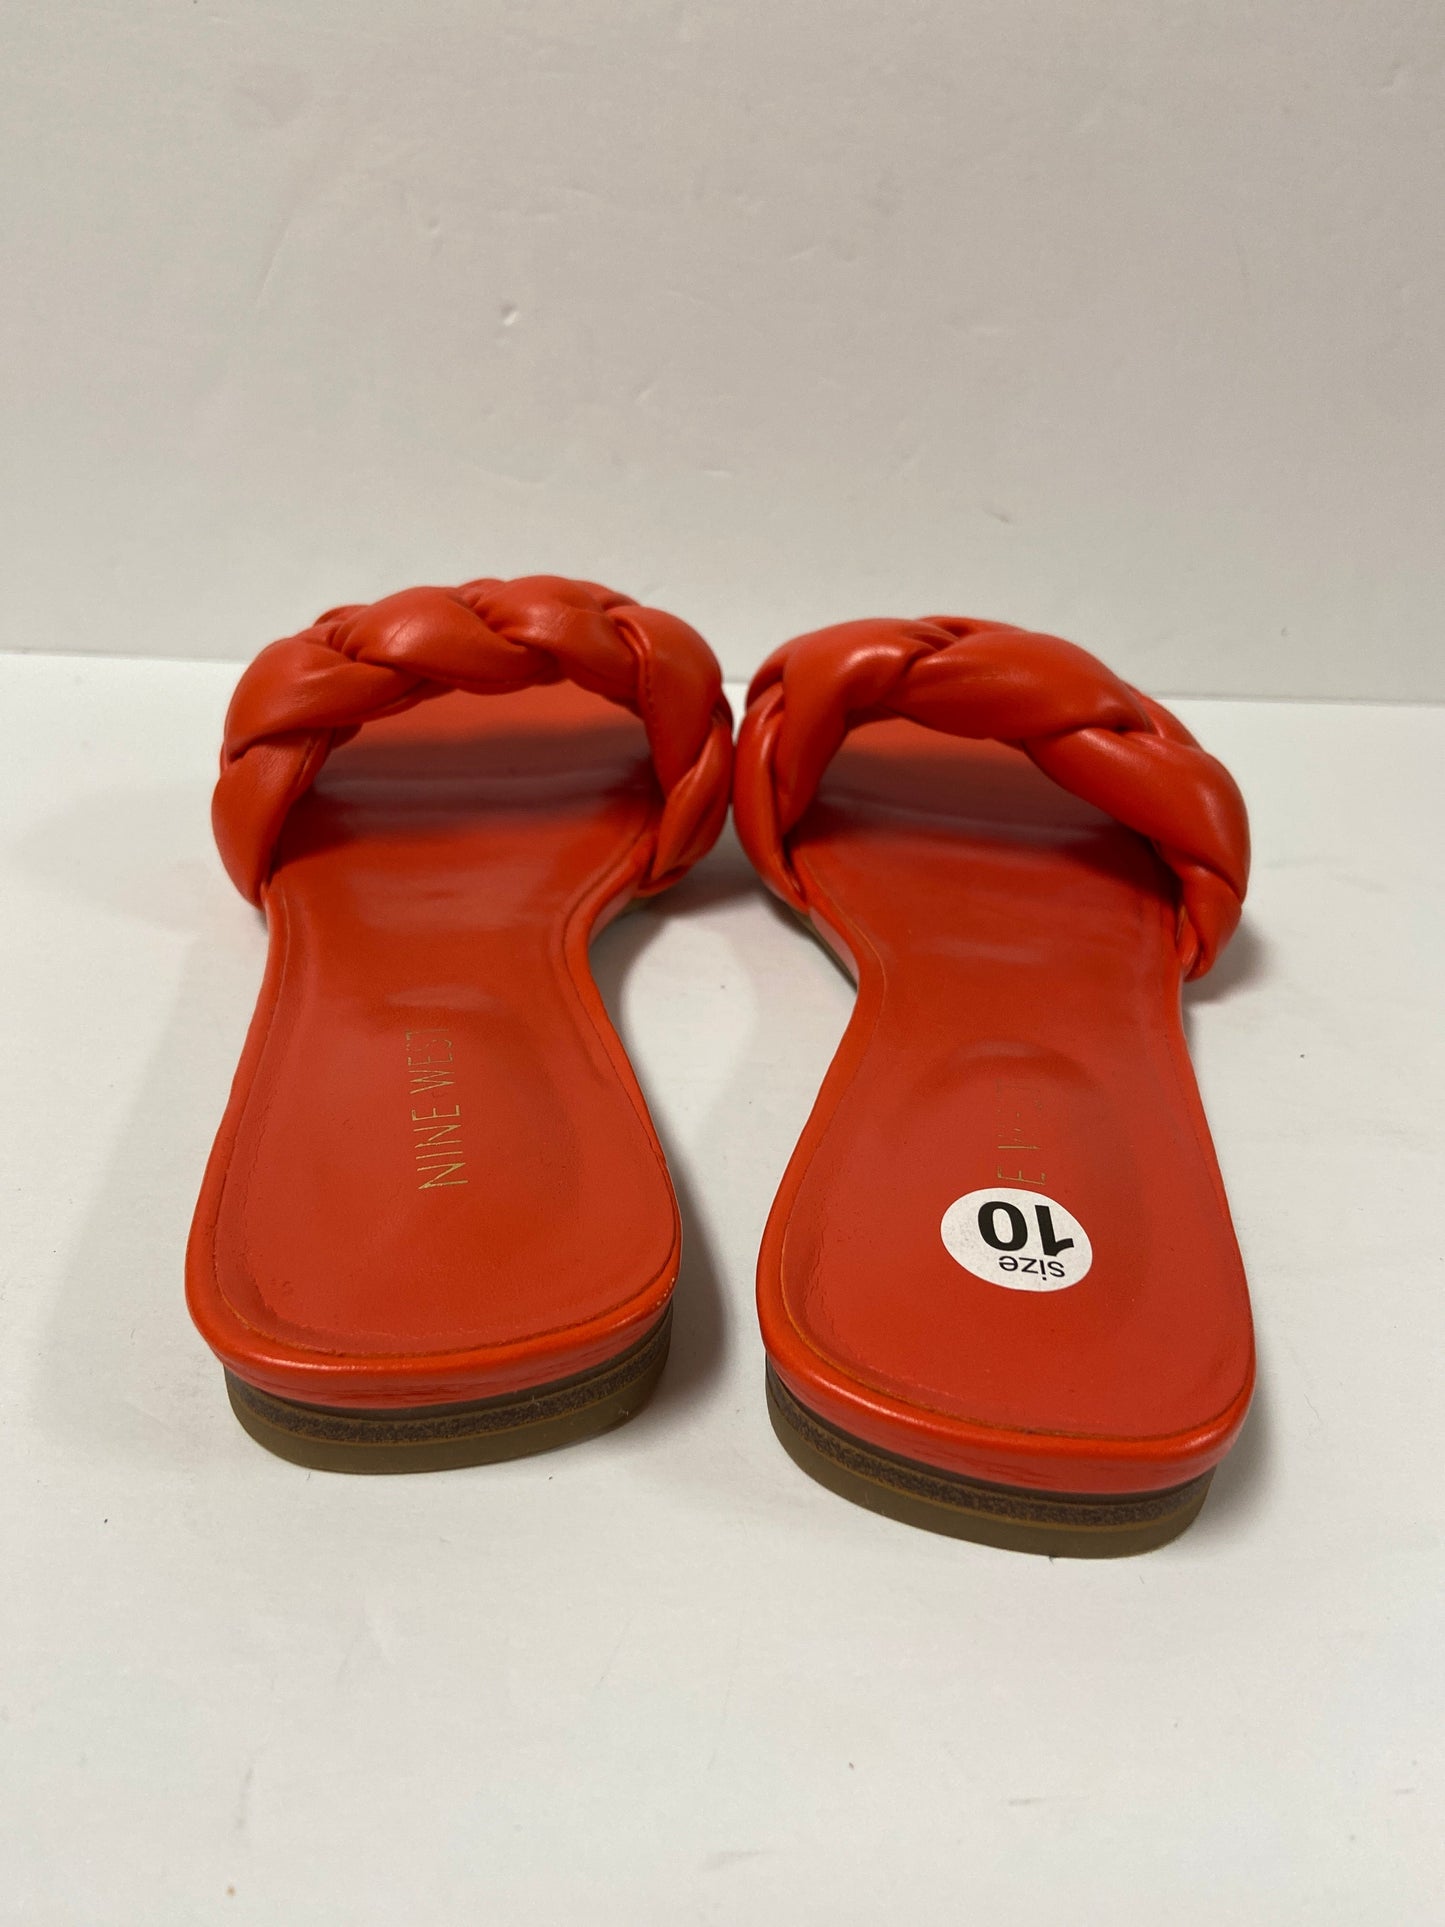 Sandals Flats By Nine West  Size: 10